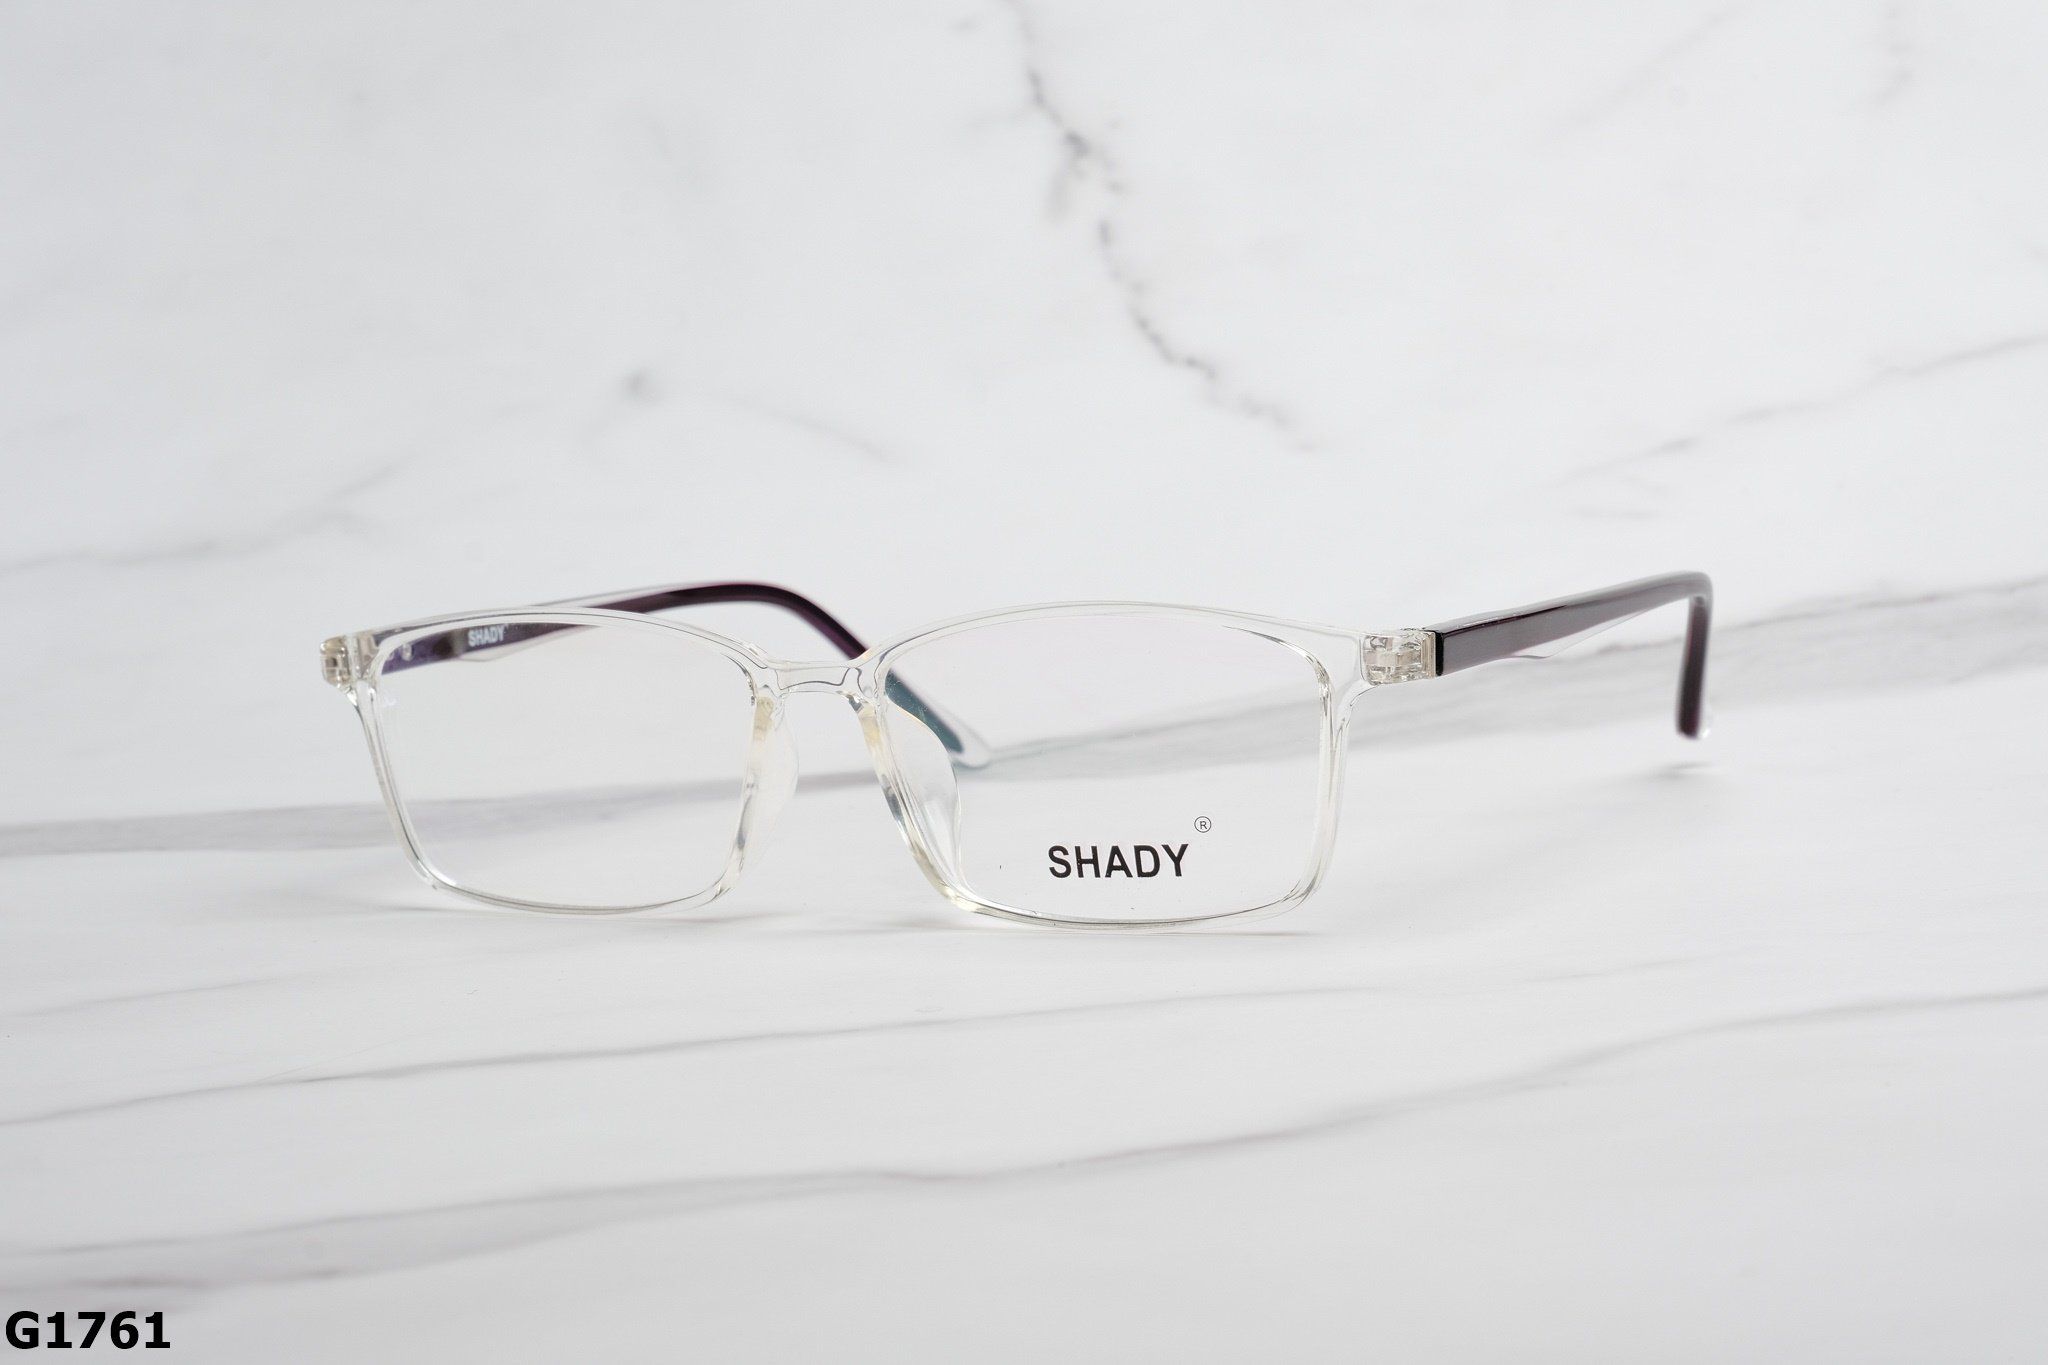  SHADY Eyewear - Glasses - G1761 